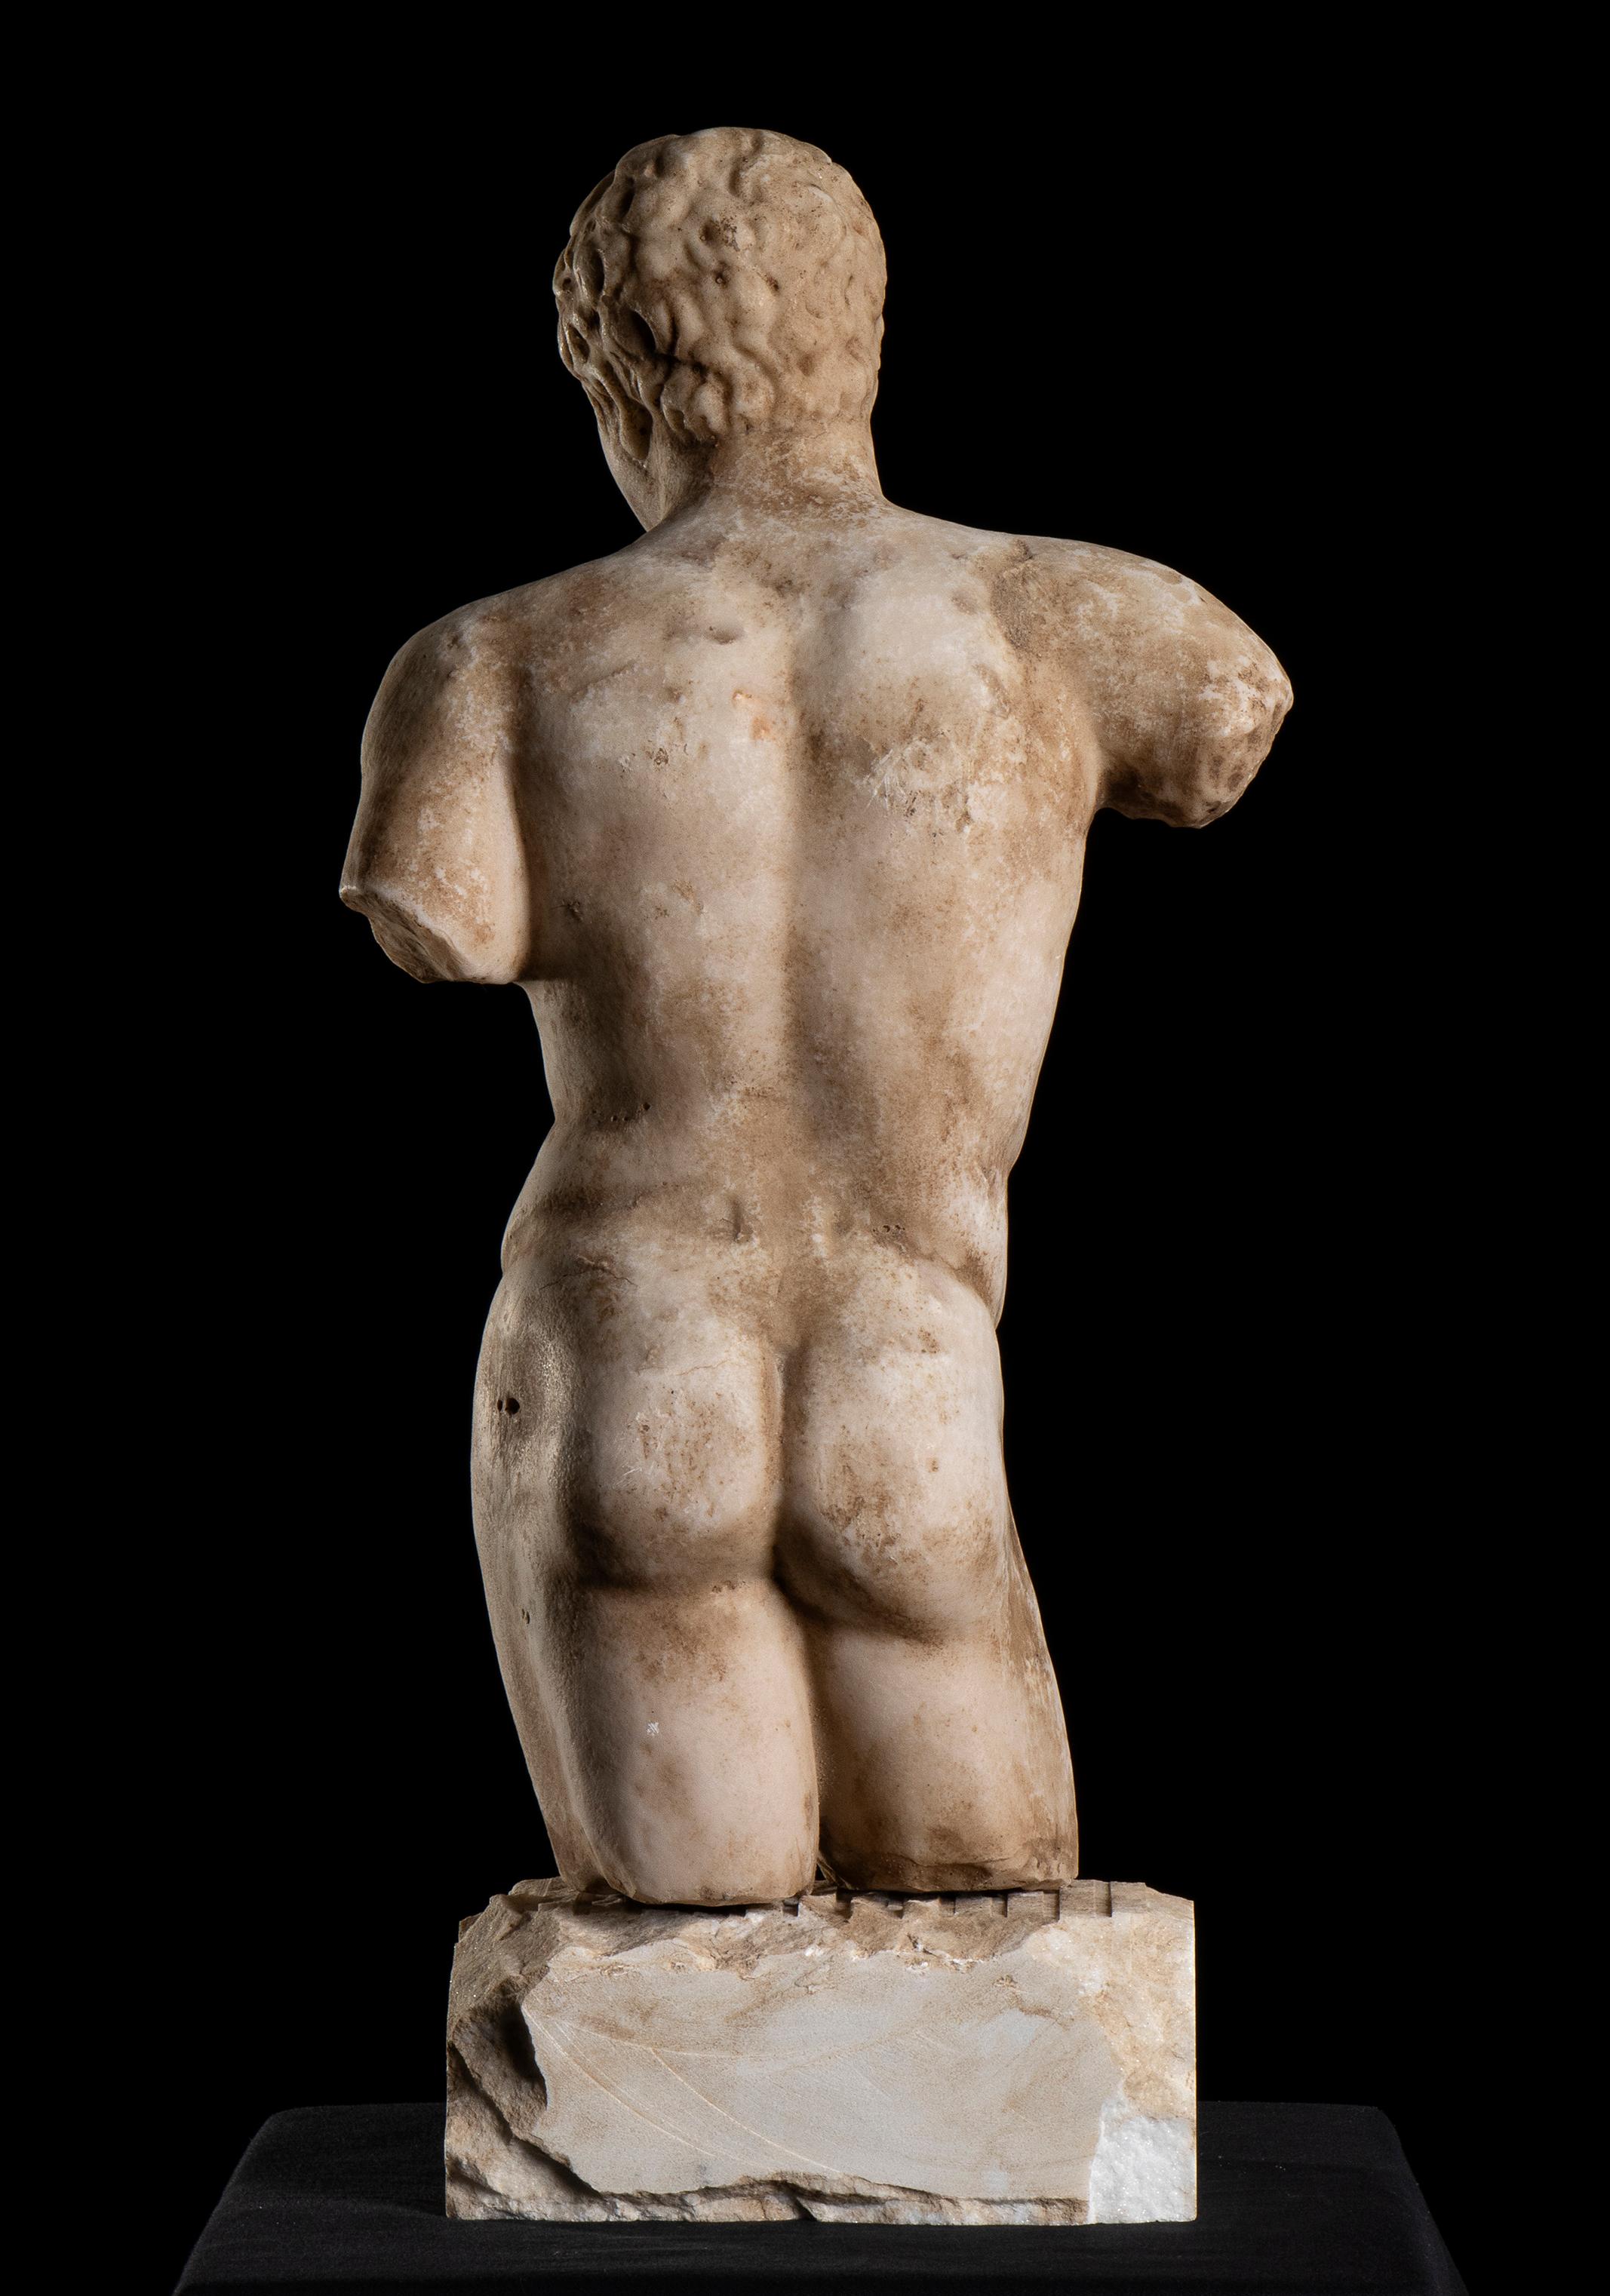 Torso Sculpture of Doryphoros as a Torso After the Greek Original by Polykleitos - Black Nude Sculpture by Unknown